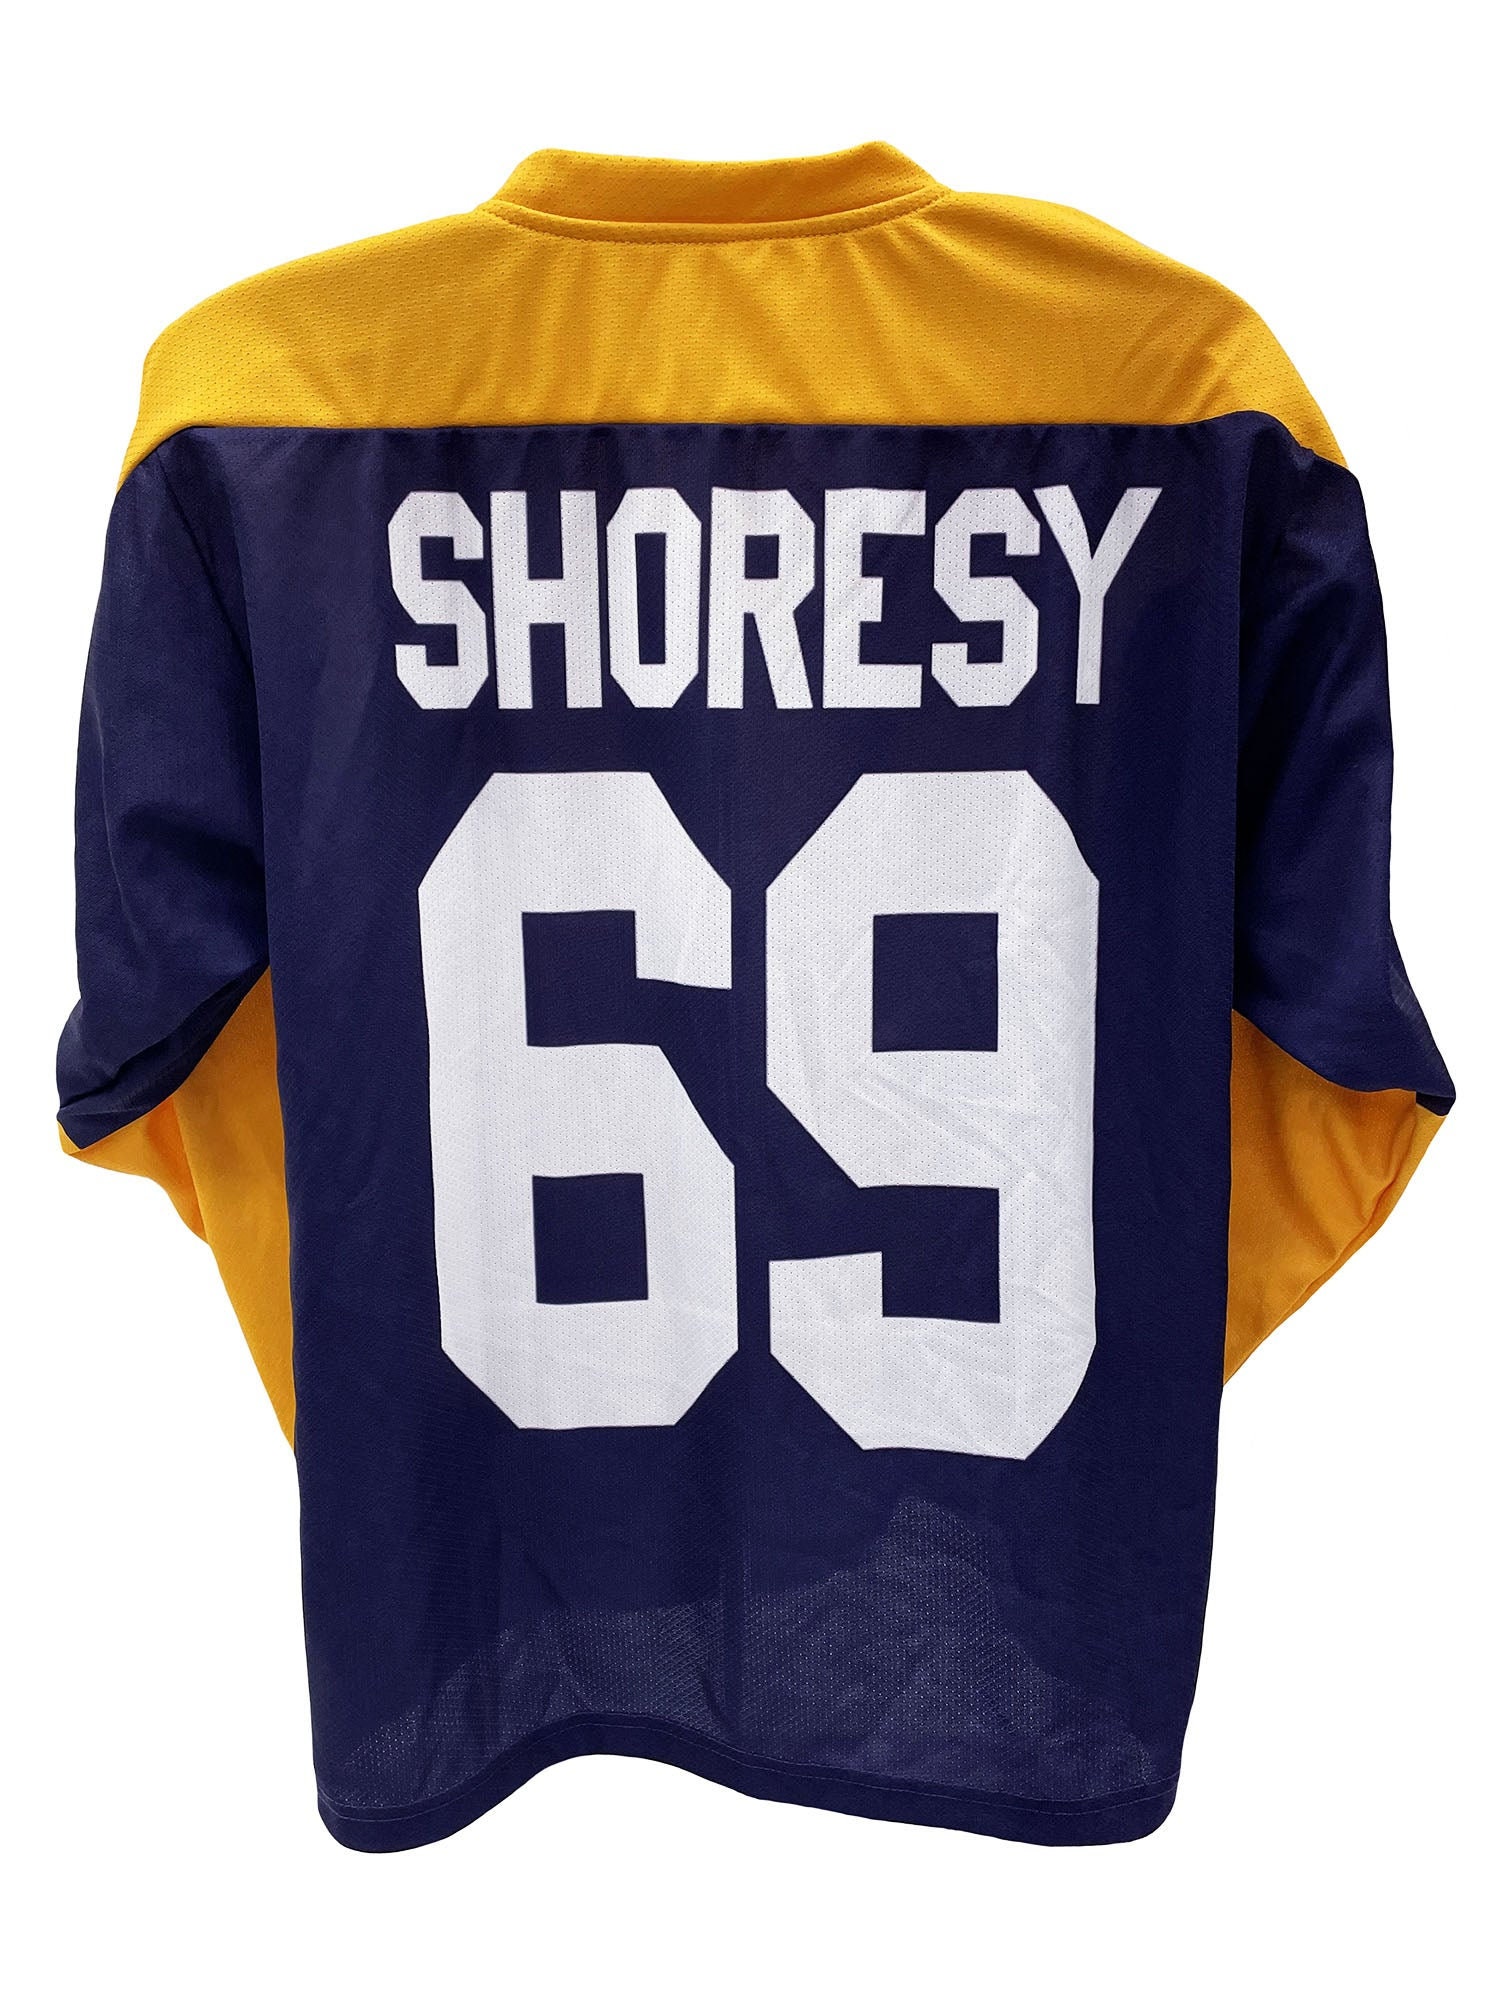 Shoresy #69 TV Series Ice Hockey Jersey for Men Christmas Gift